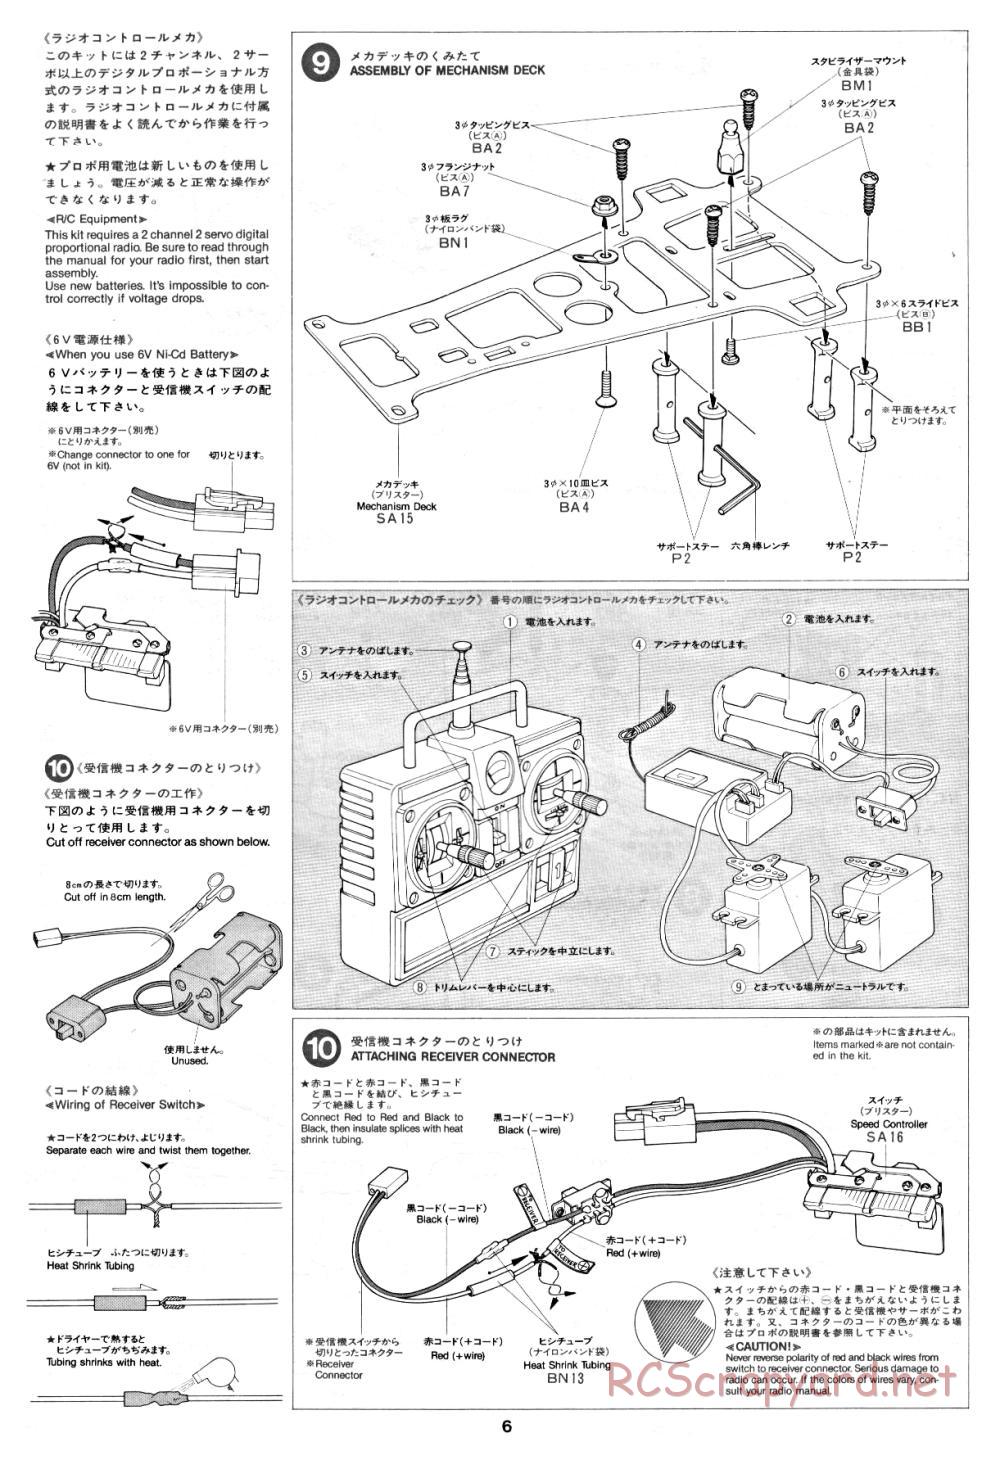 Tamiya - Toyota Tom's 84C - RM MK.6 - 58049 - Manual - Page 6